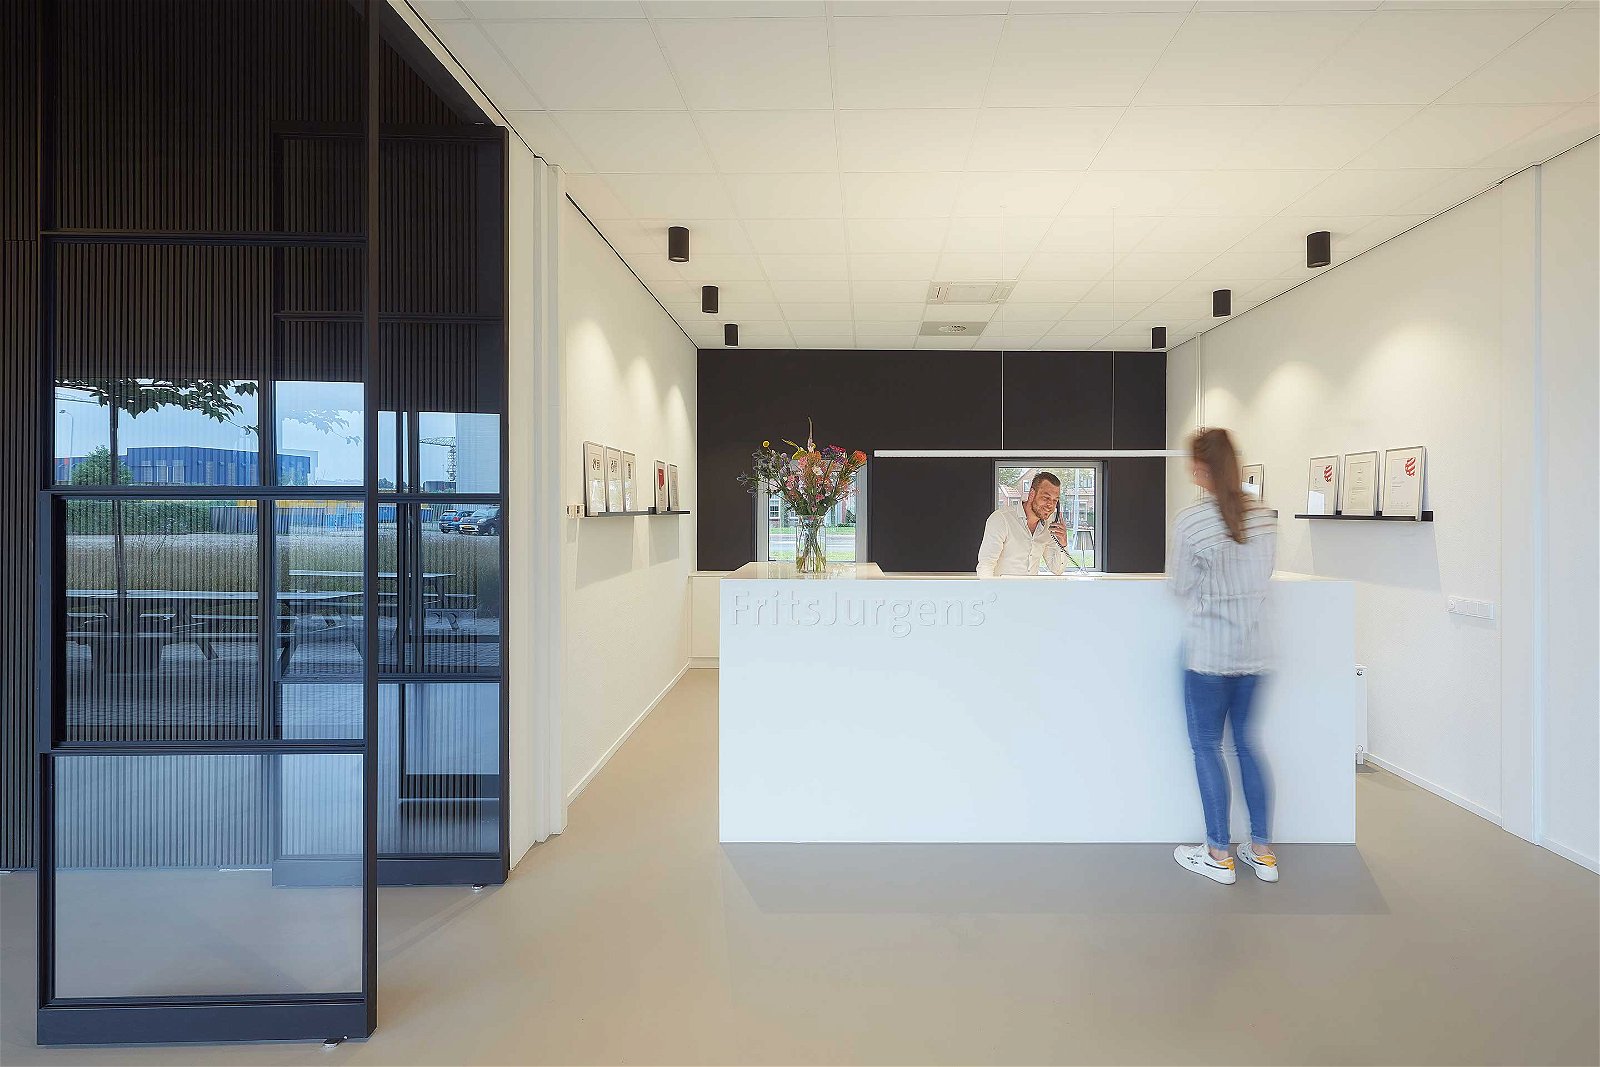 369.-Office-FritsJurgens,-doors-by-Harryvan-Interieurbouw,-photography-by-Gerard-van-der-Beek05.jpeg